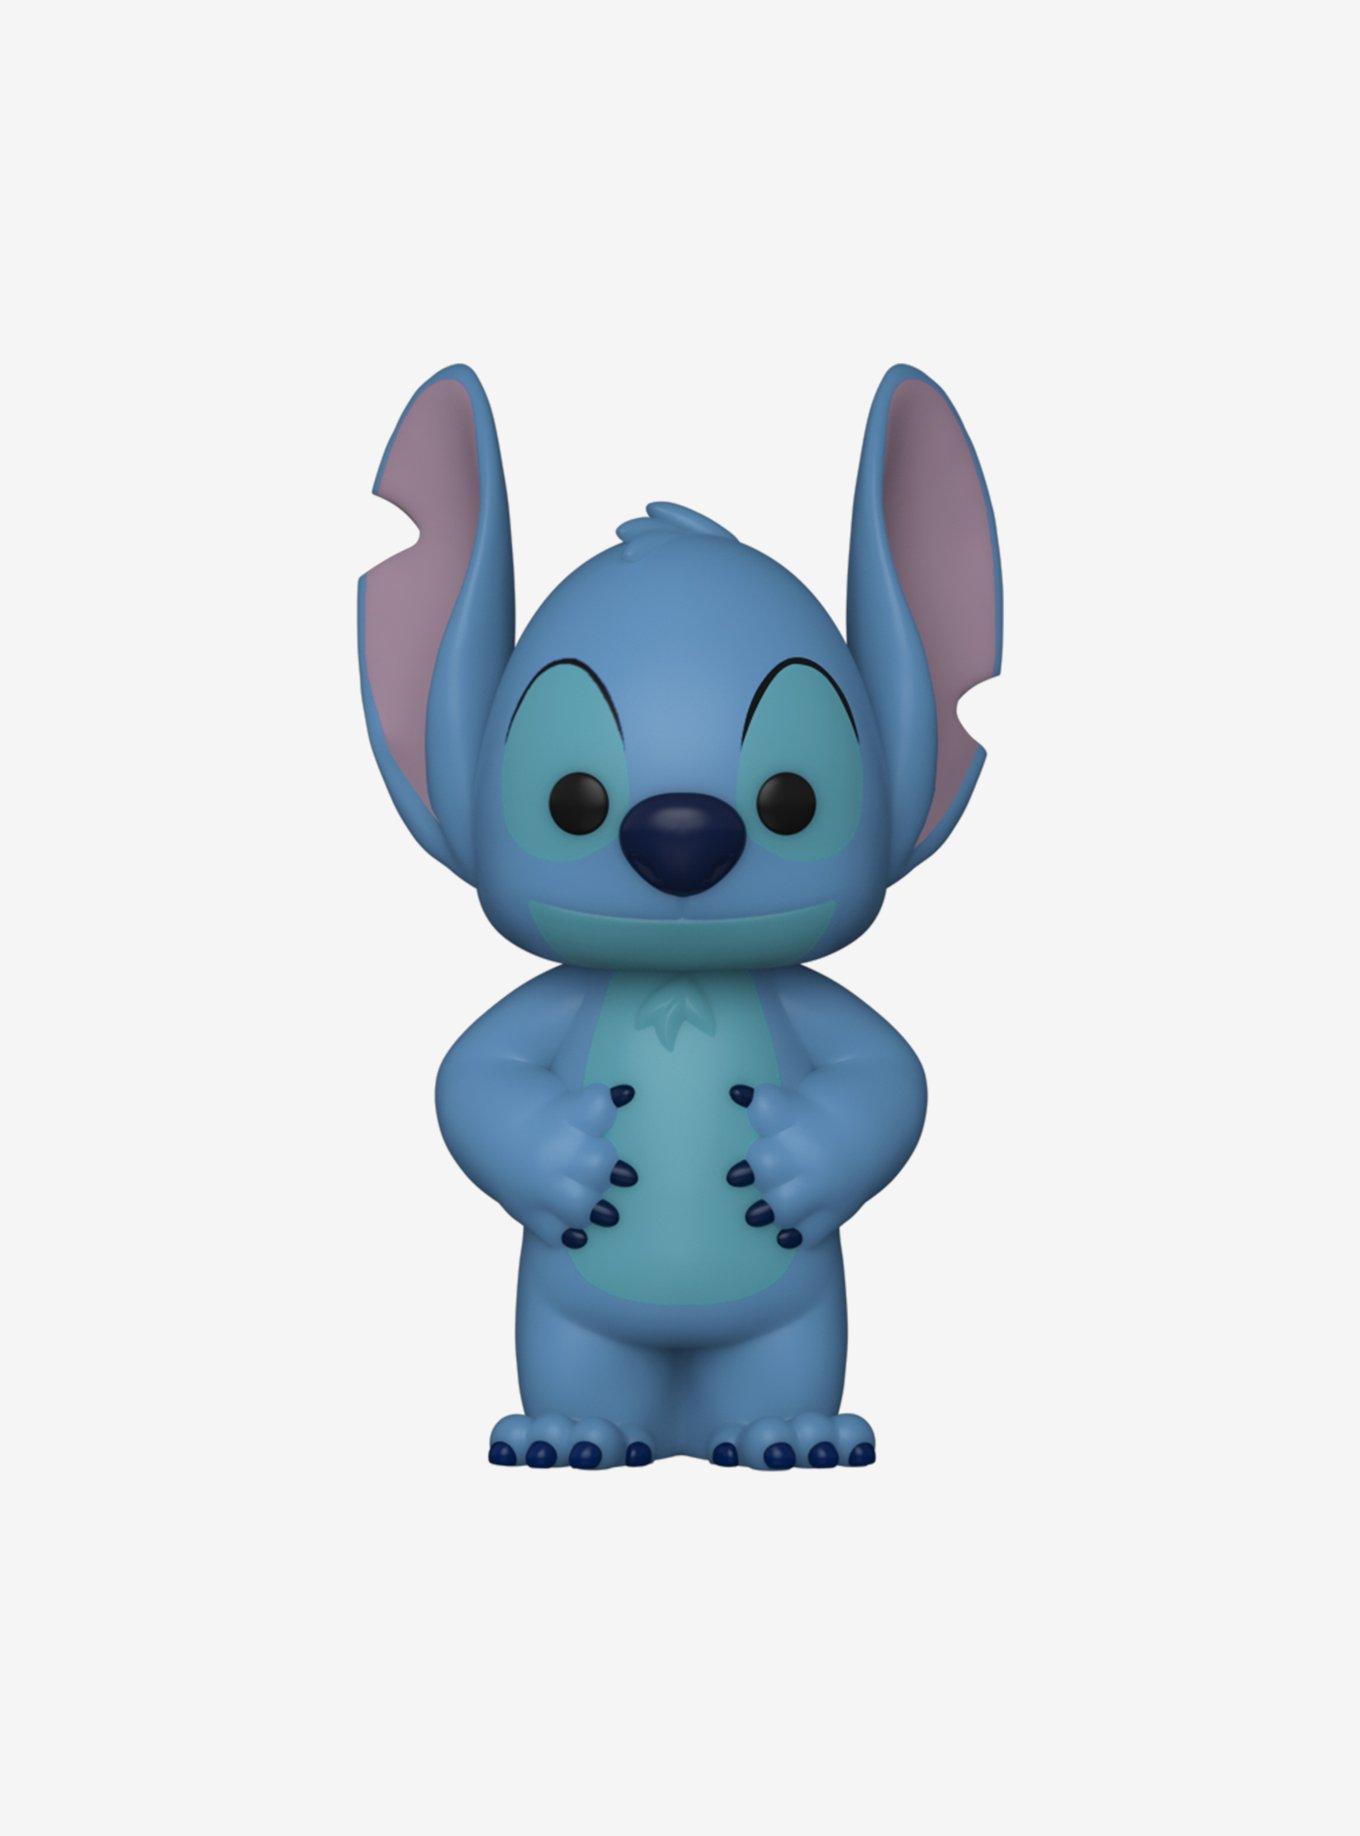 Funko Pop! Disney: Lilo & Stitch - Stitch & Angel Holiday 2 Pack (Exclusive)